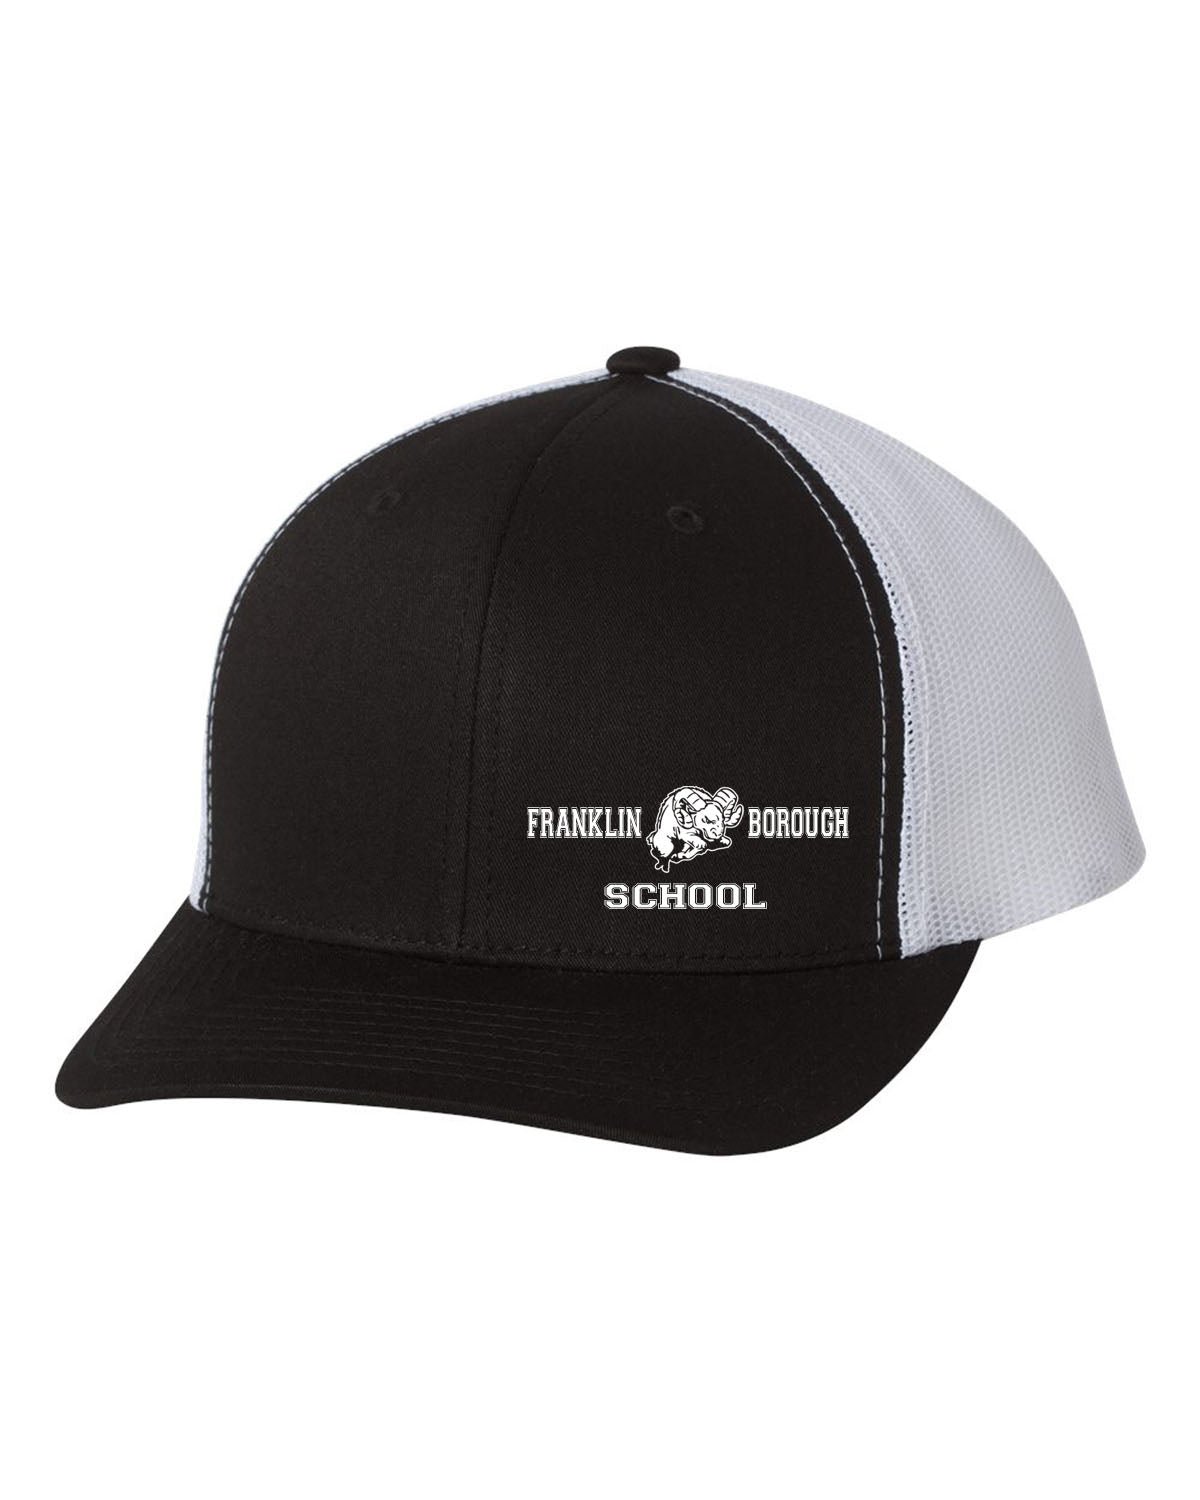 Franklin School Design 3 Trucker Hat